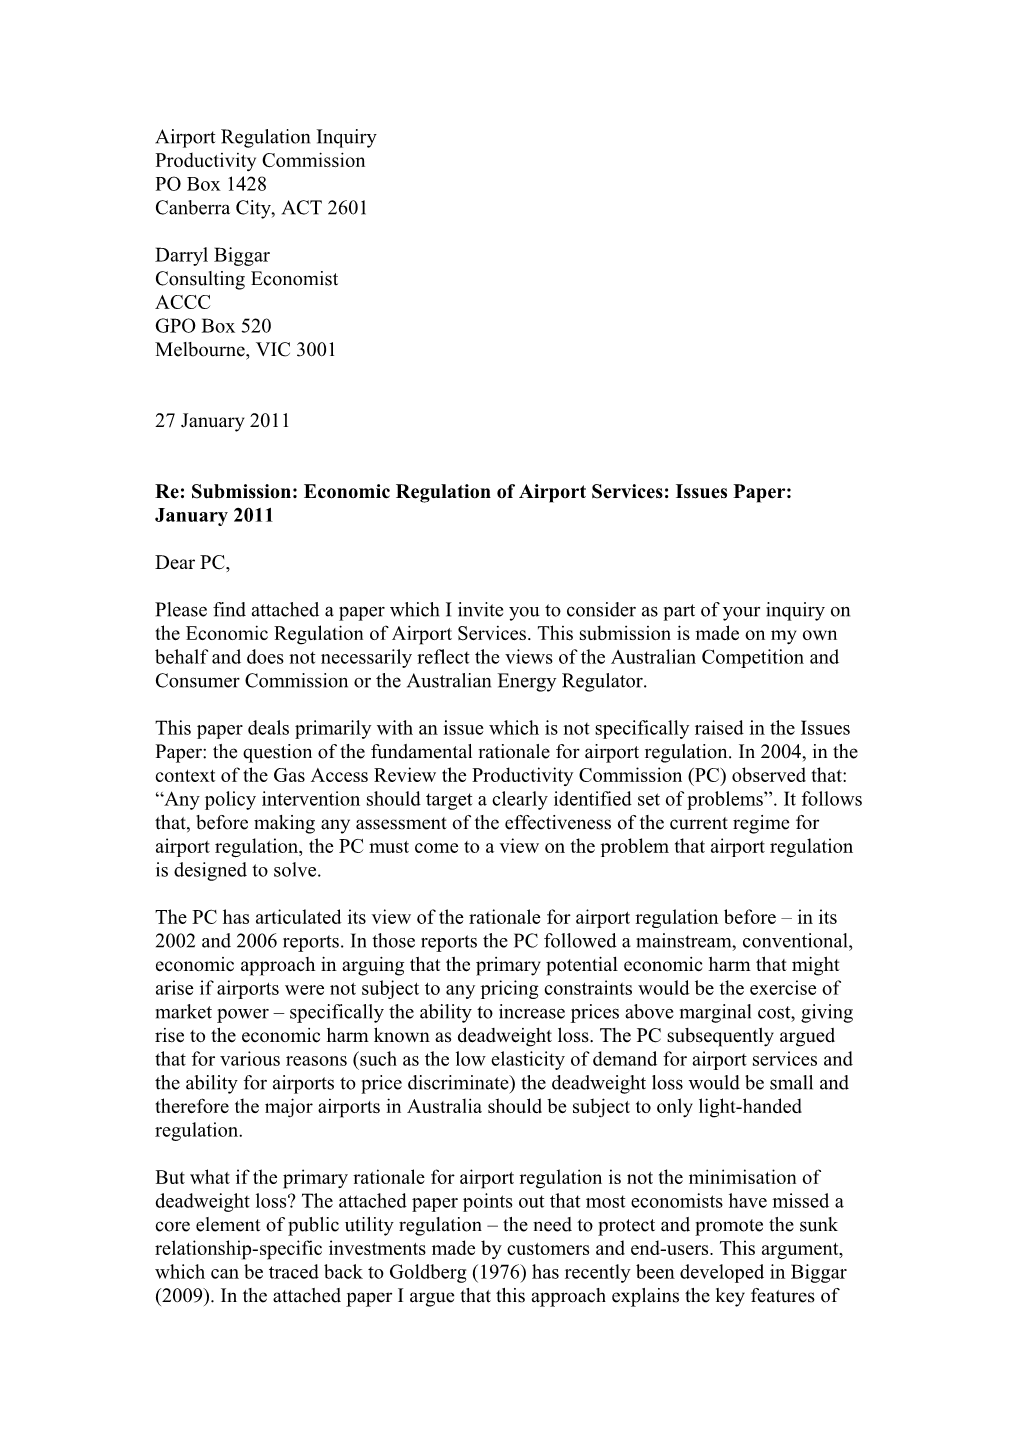 Submission 1 - Darryl Biggar - Economic Regulation of Airport Services - Public Inquiry